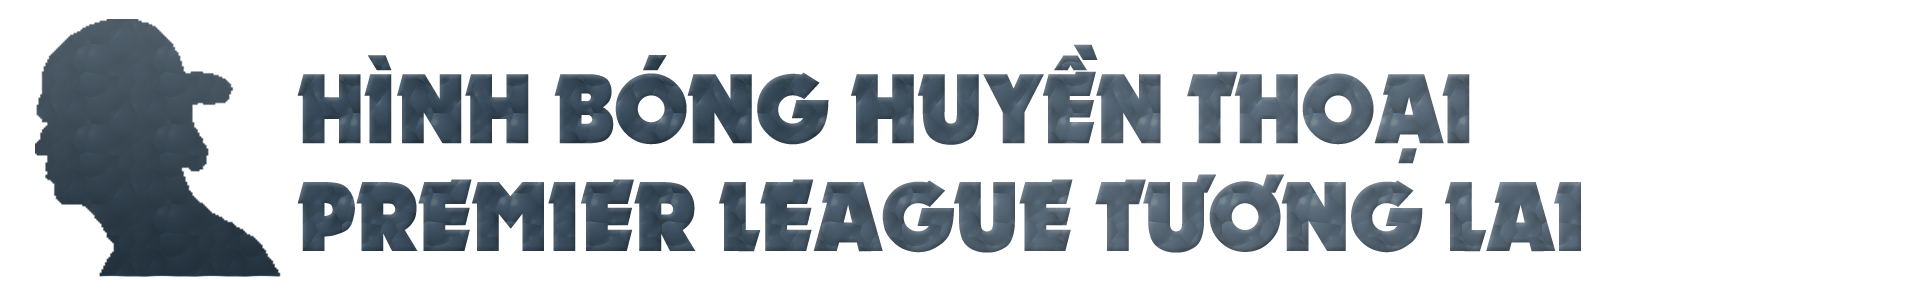 Haaland tỏa sáng: Chân dung huyền thoại tương lai của Premier League - 13